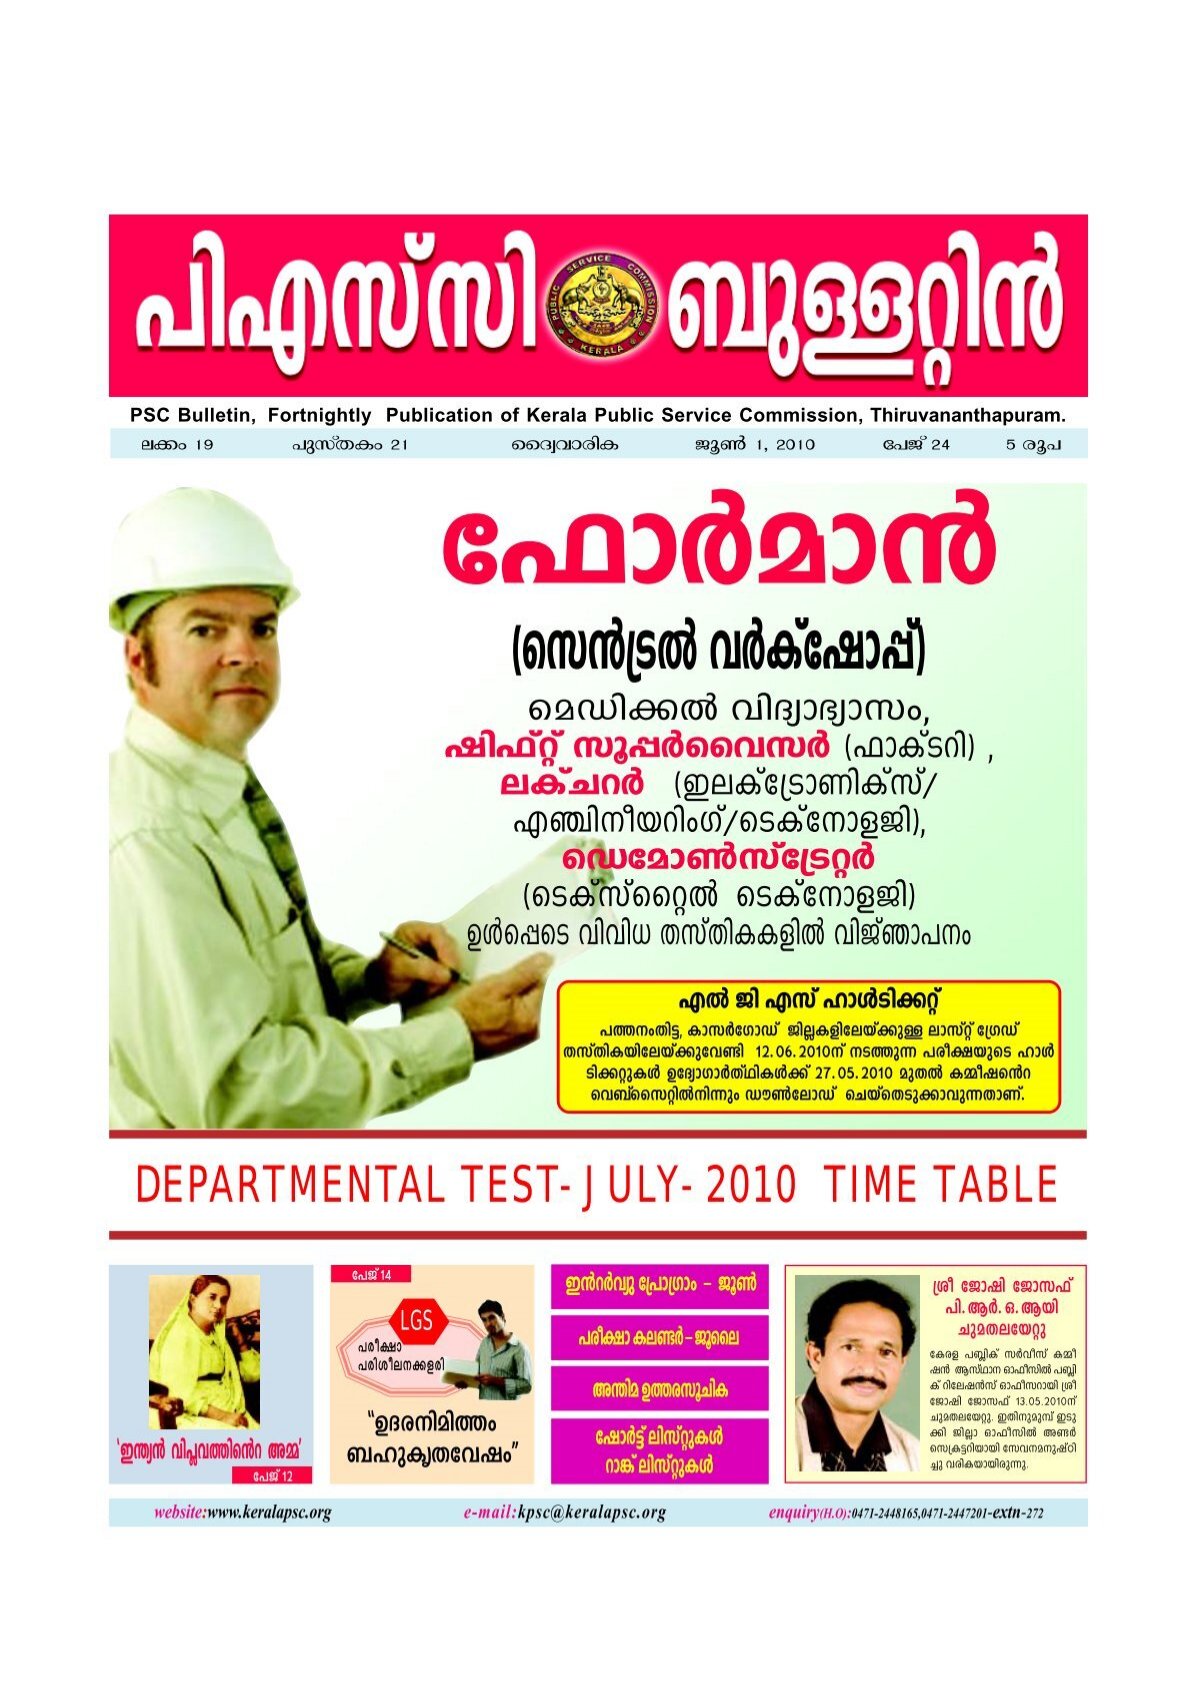 PSC Bulletin - June 01, 2010 - Kerala Public Service Commission